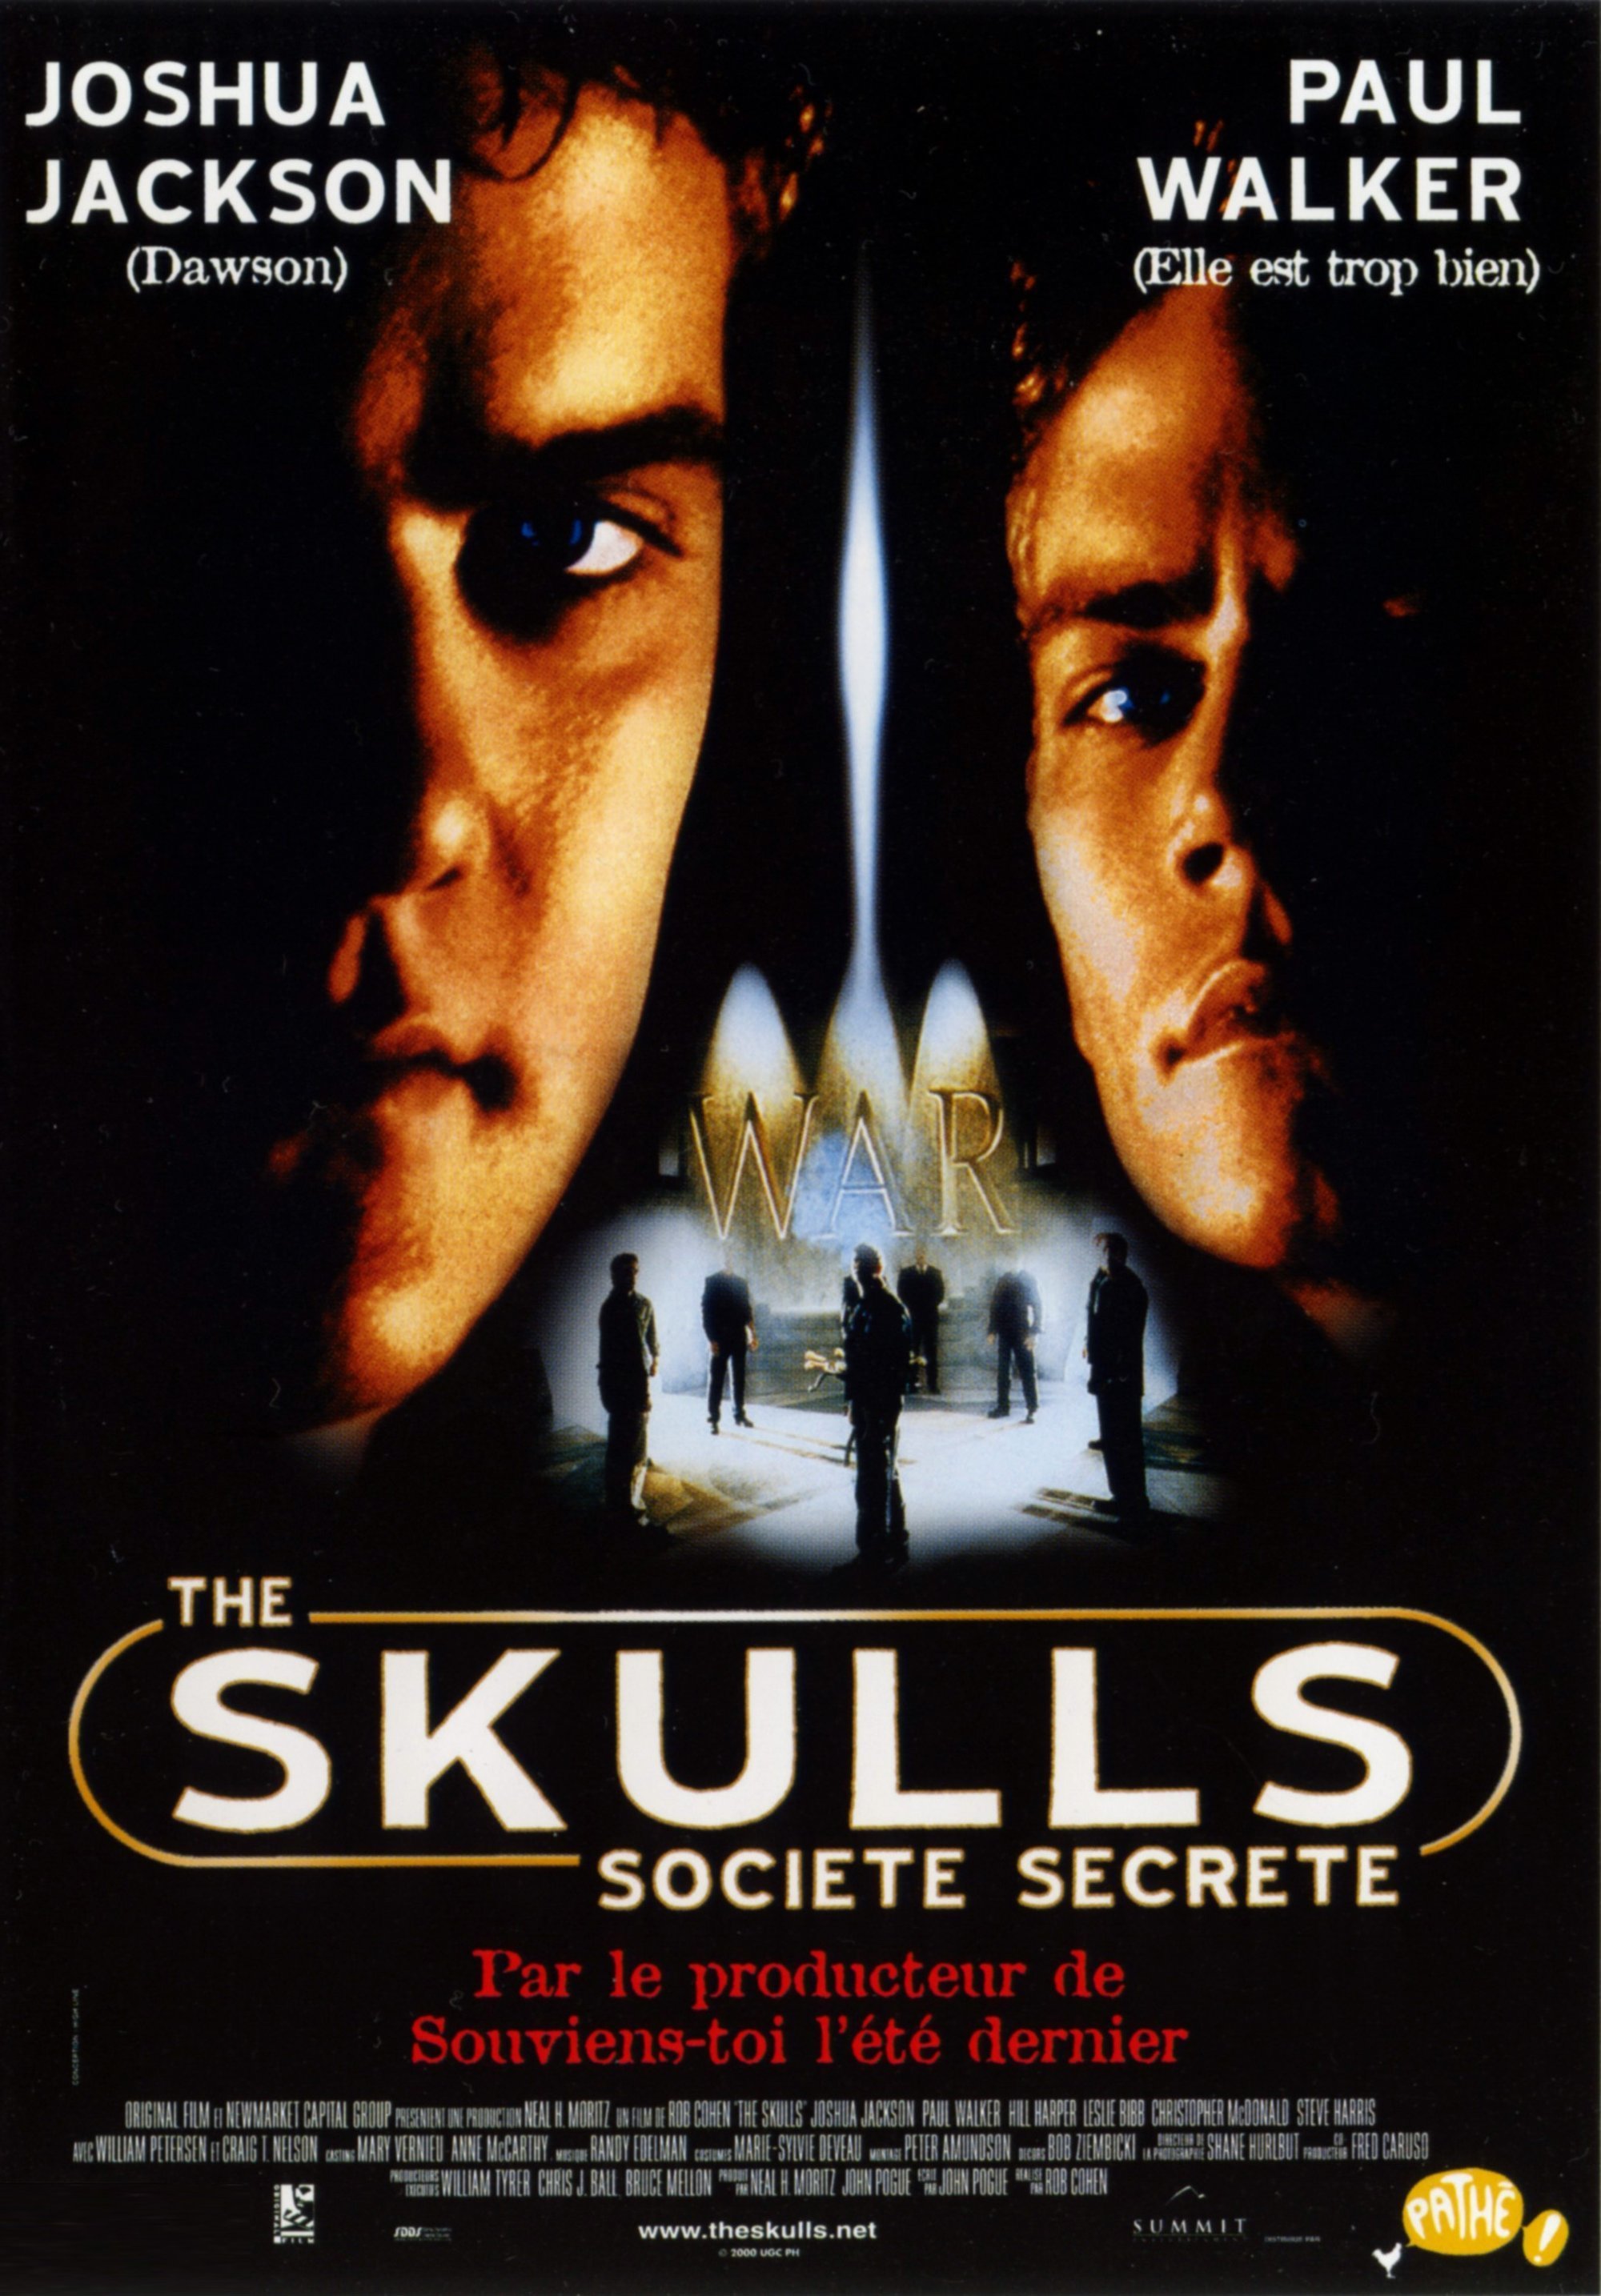 The skulls - Société secrète